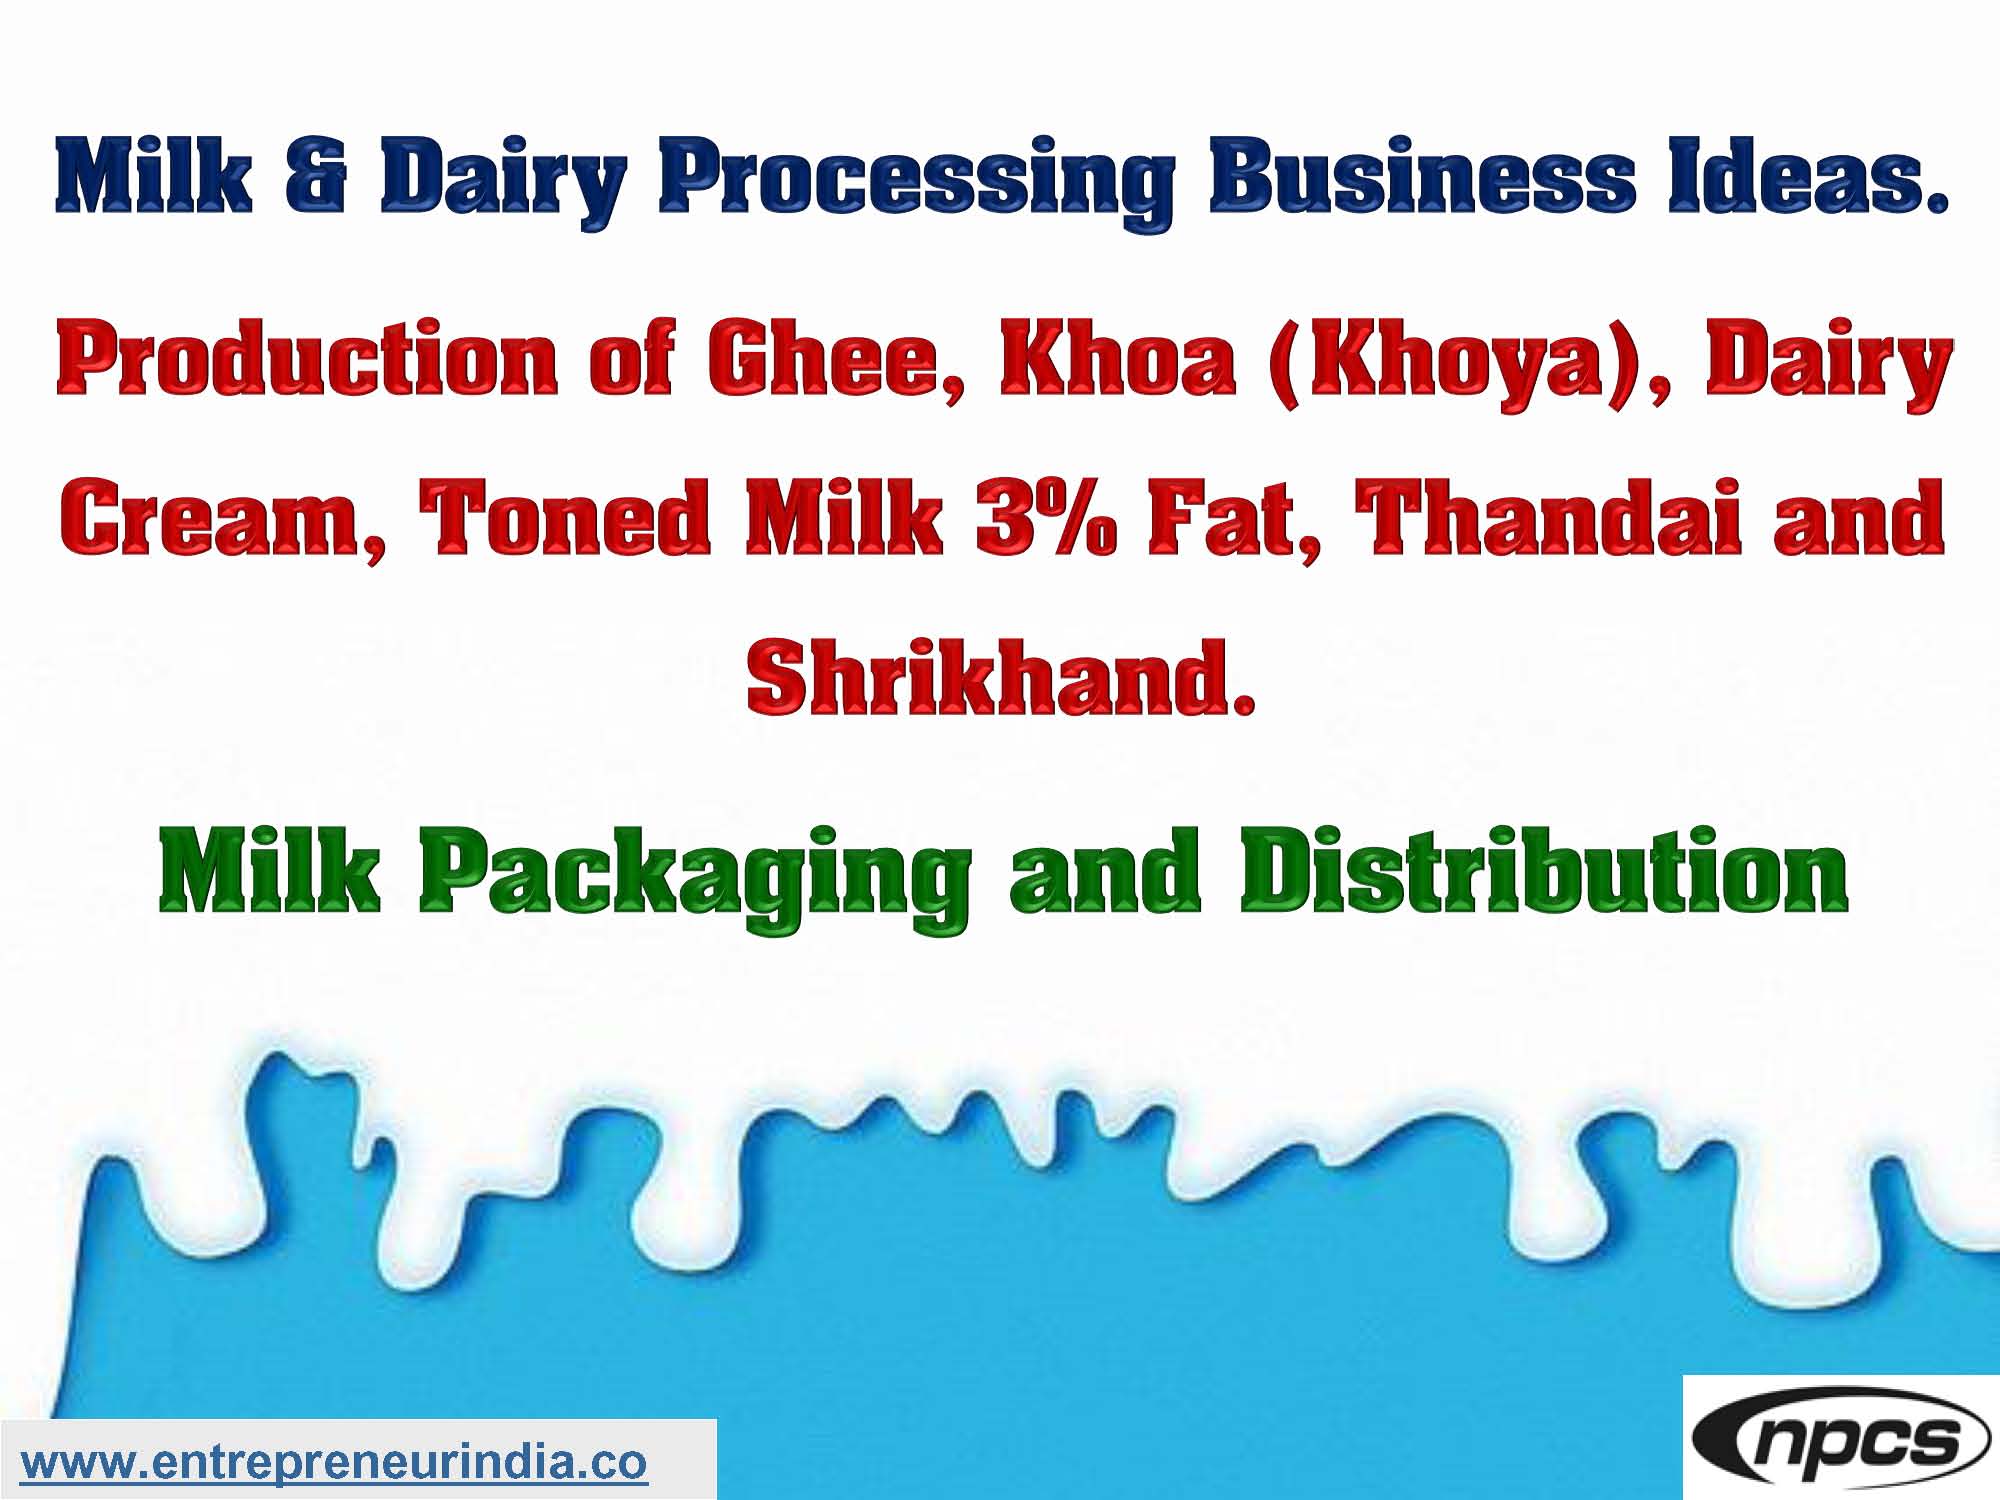 Milk & Dairy Processing Business Ideas